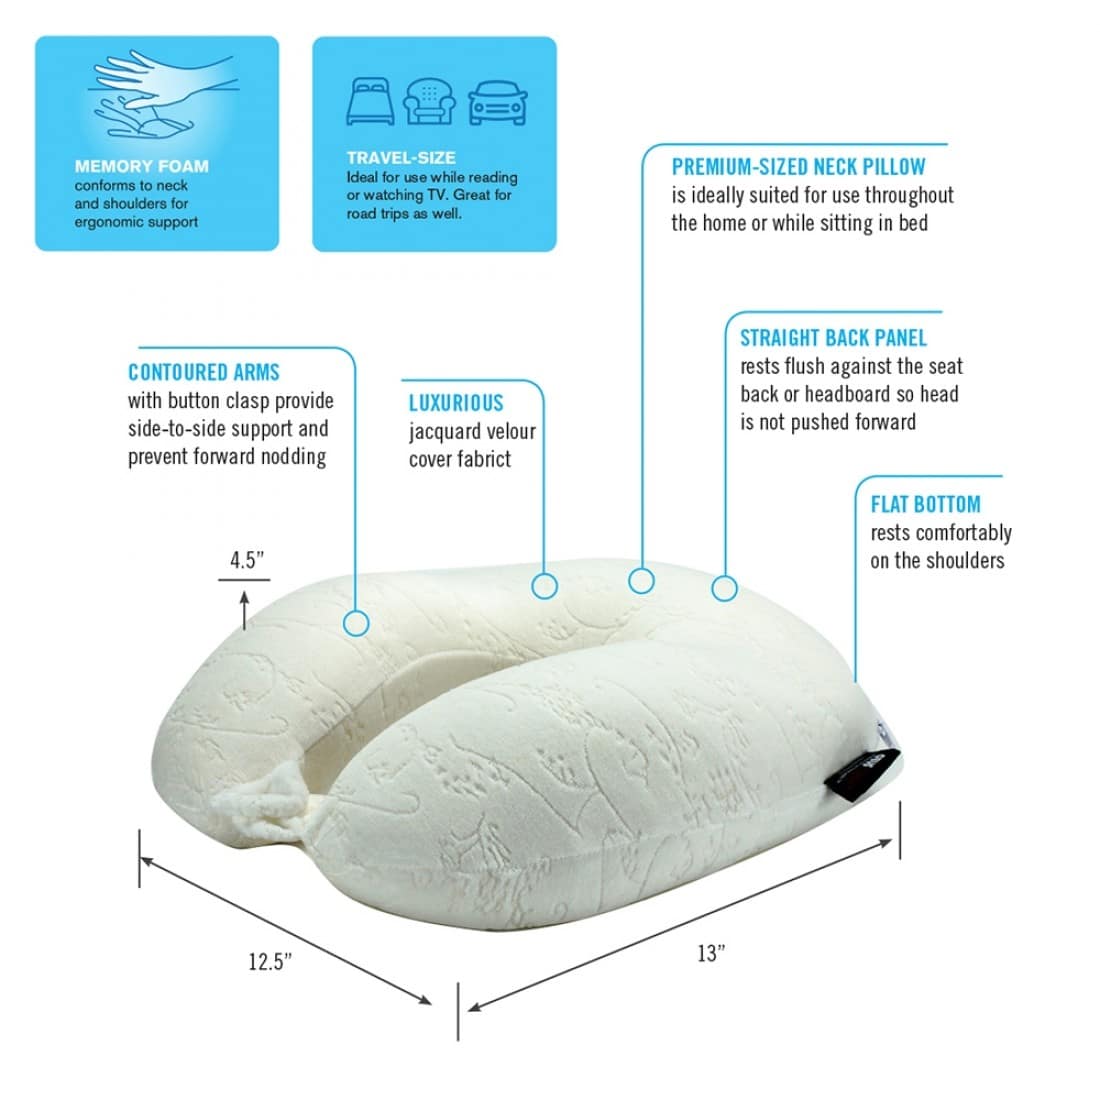 Memory Foam Travel Pillow Details